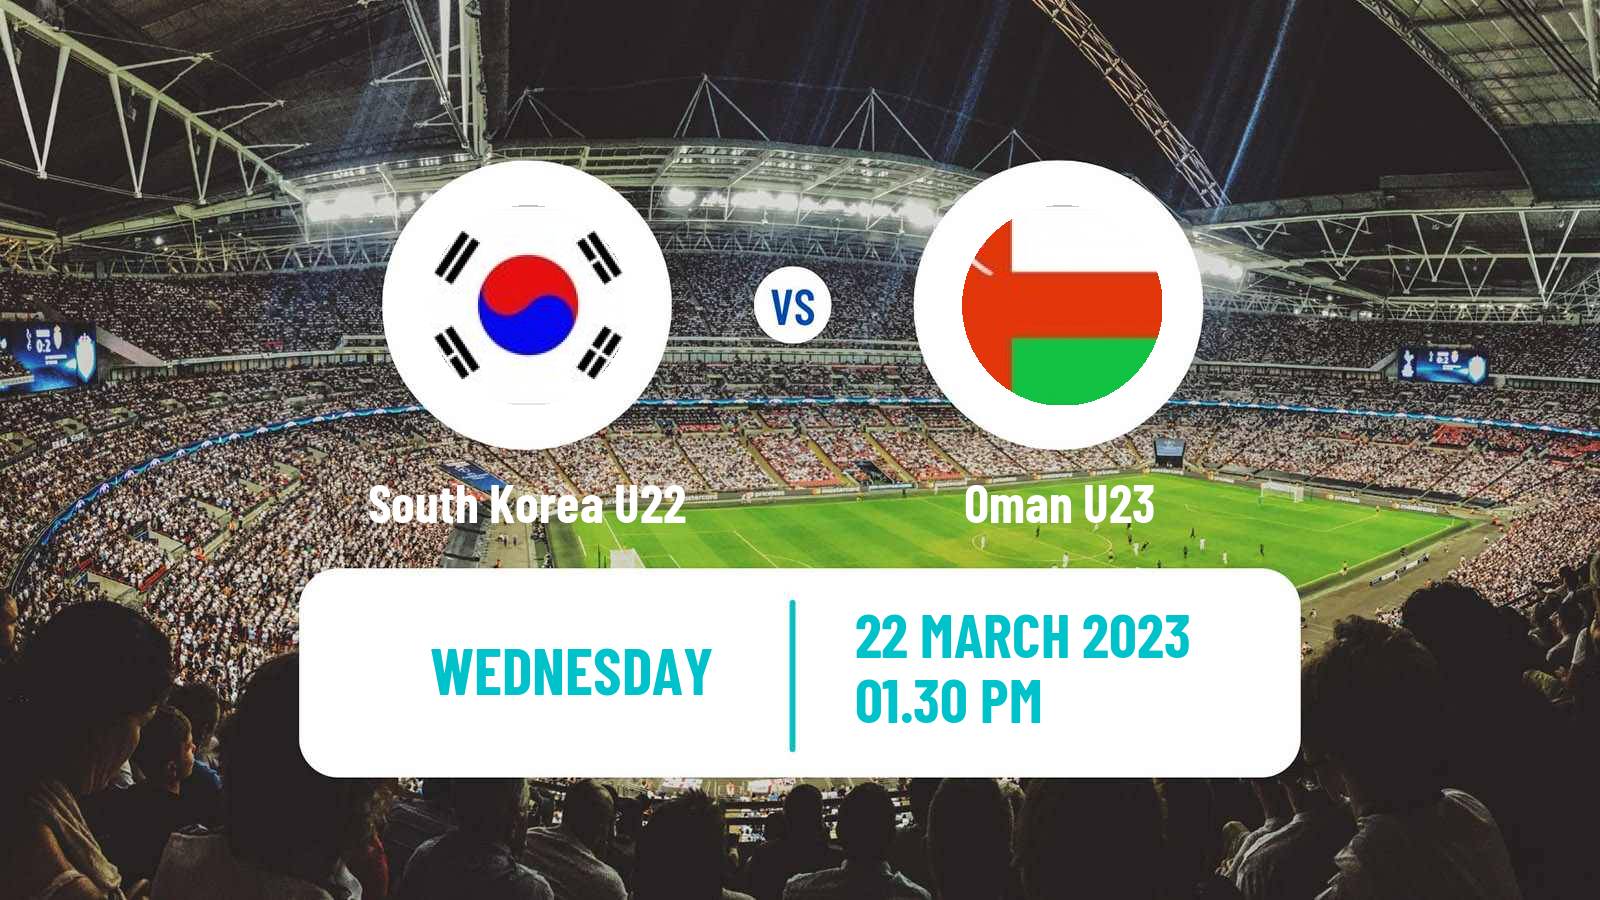 Soccer Friendly South Korea U22 - Oman U23